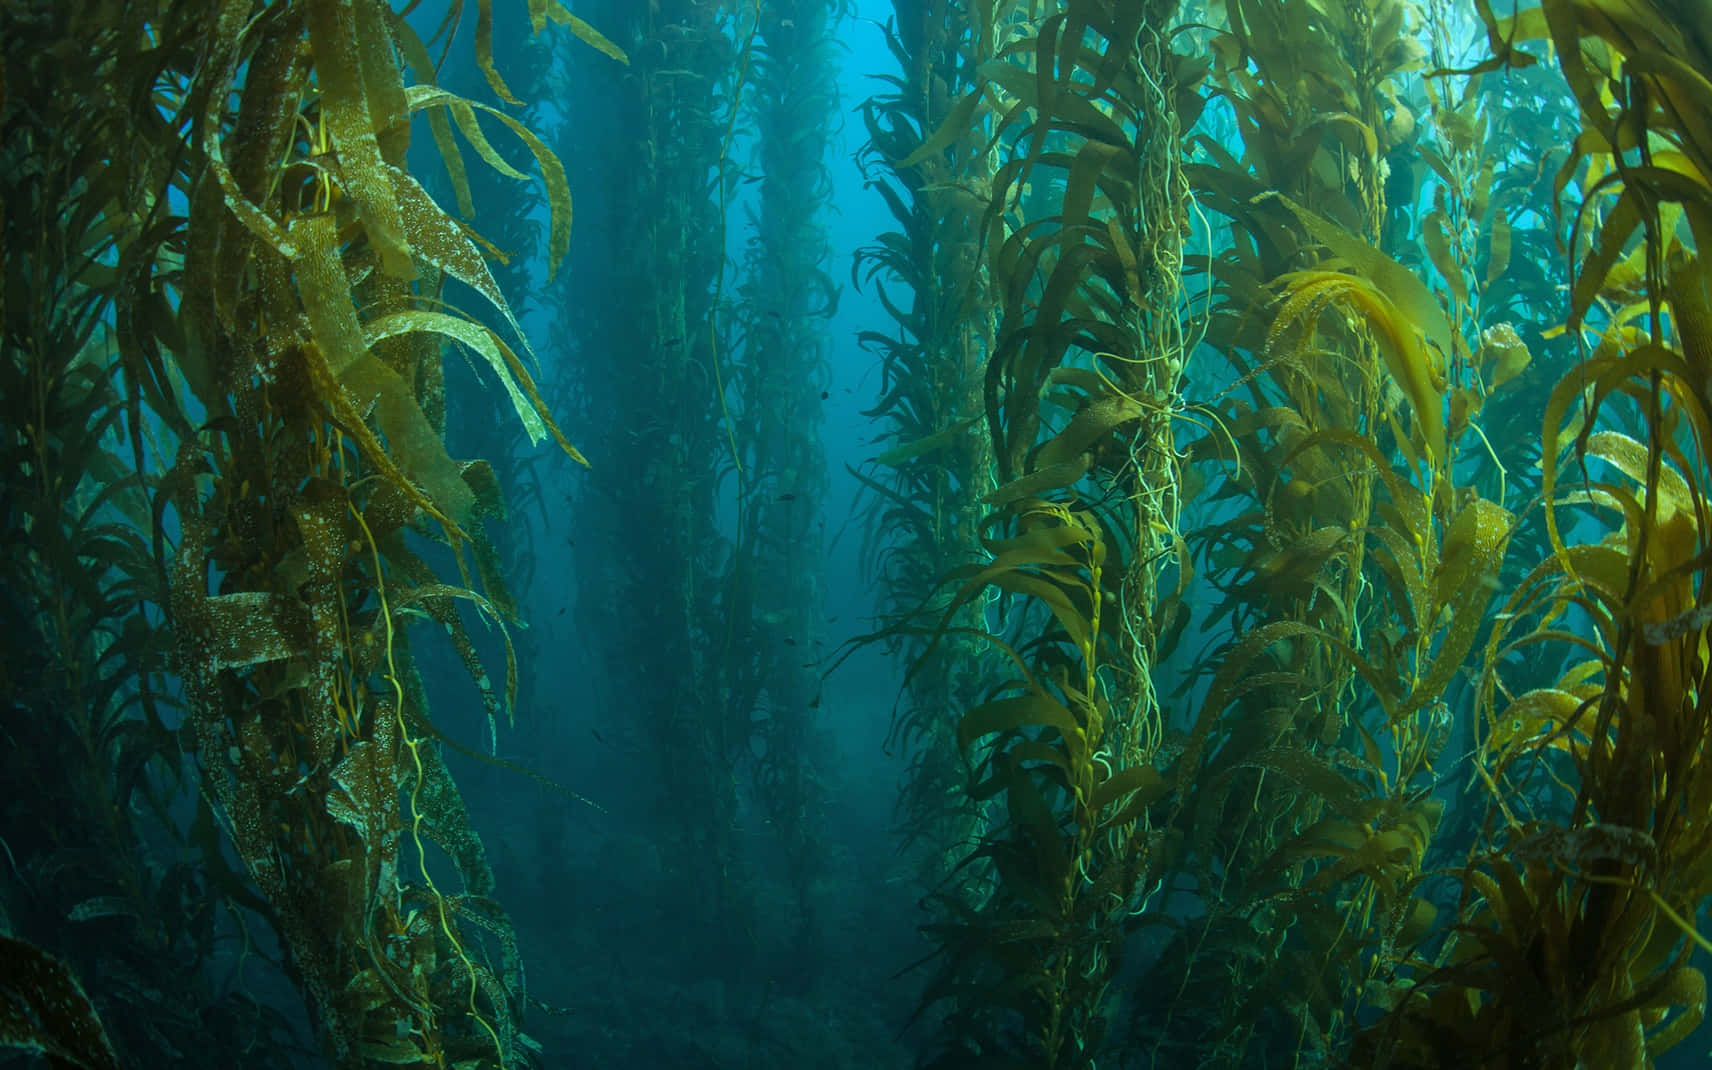 Kelp Forest In The Ocean